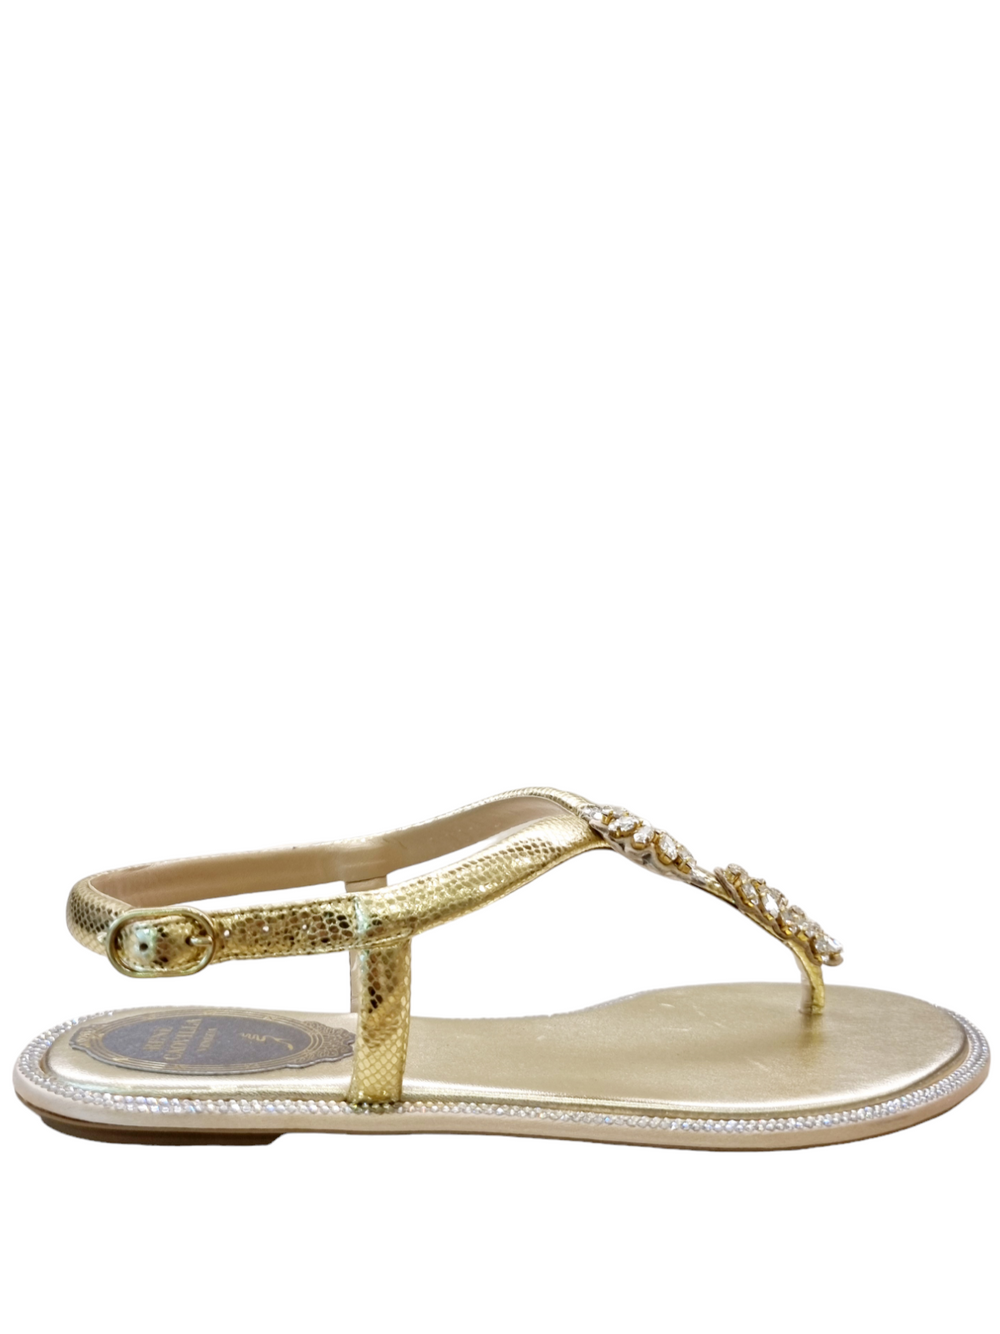 Katy Light Gold Flat Sandals - Rene Caovilla - Liberty Shoes Australia